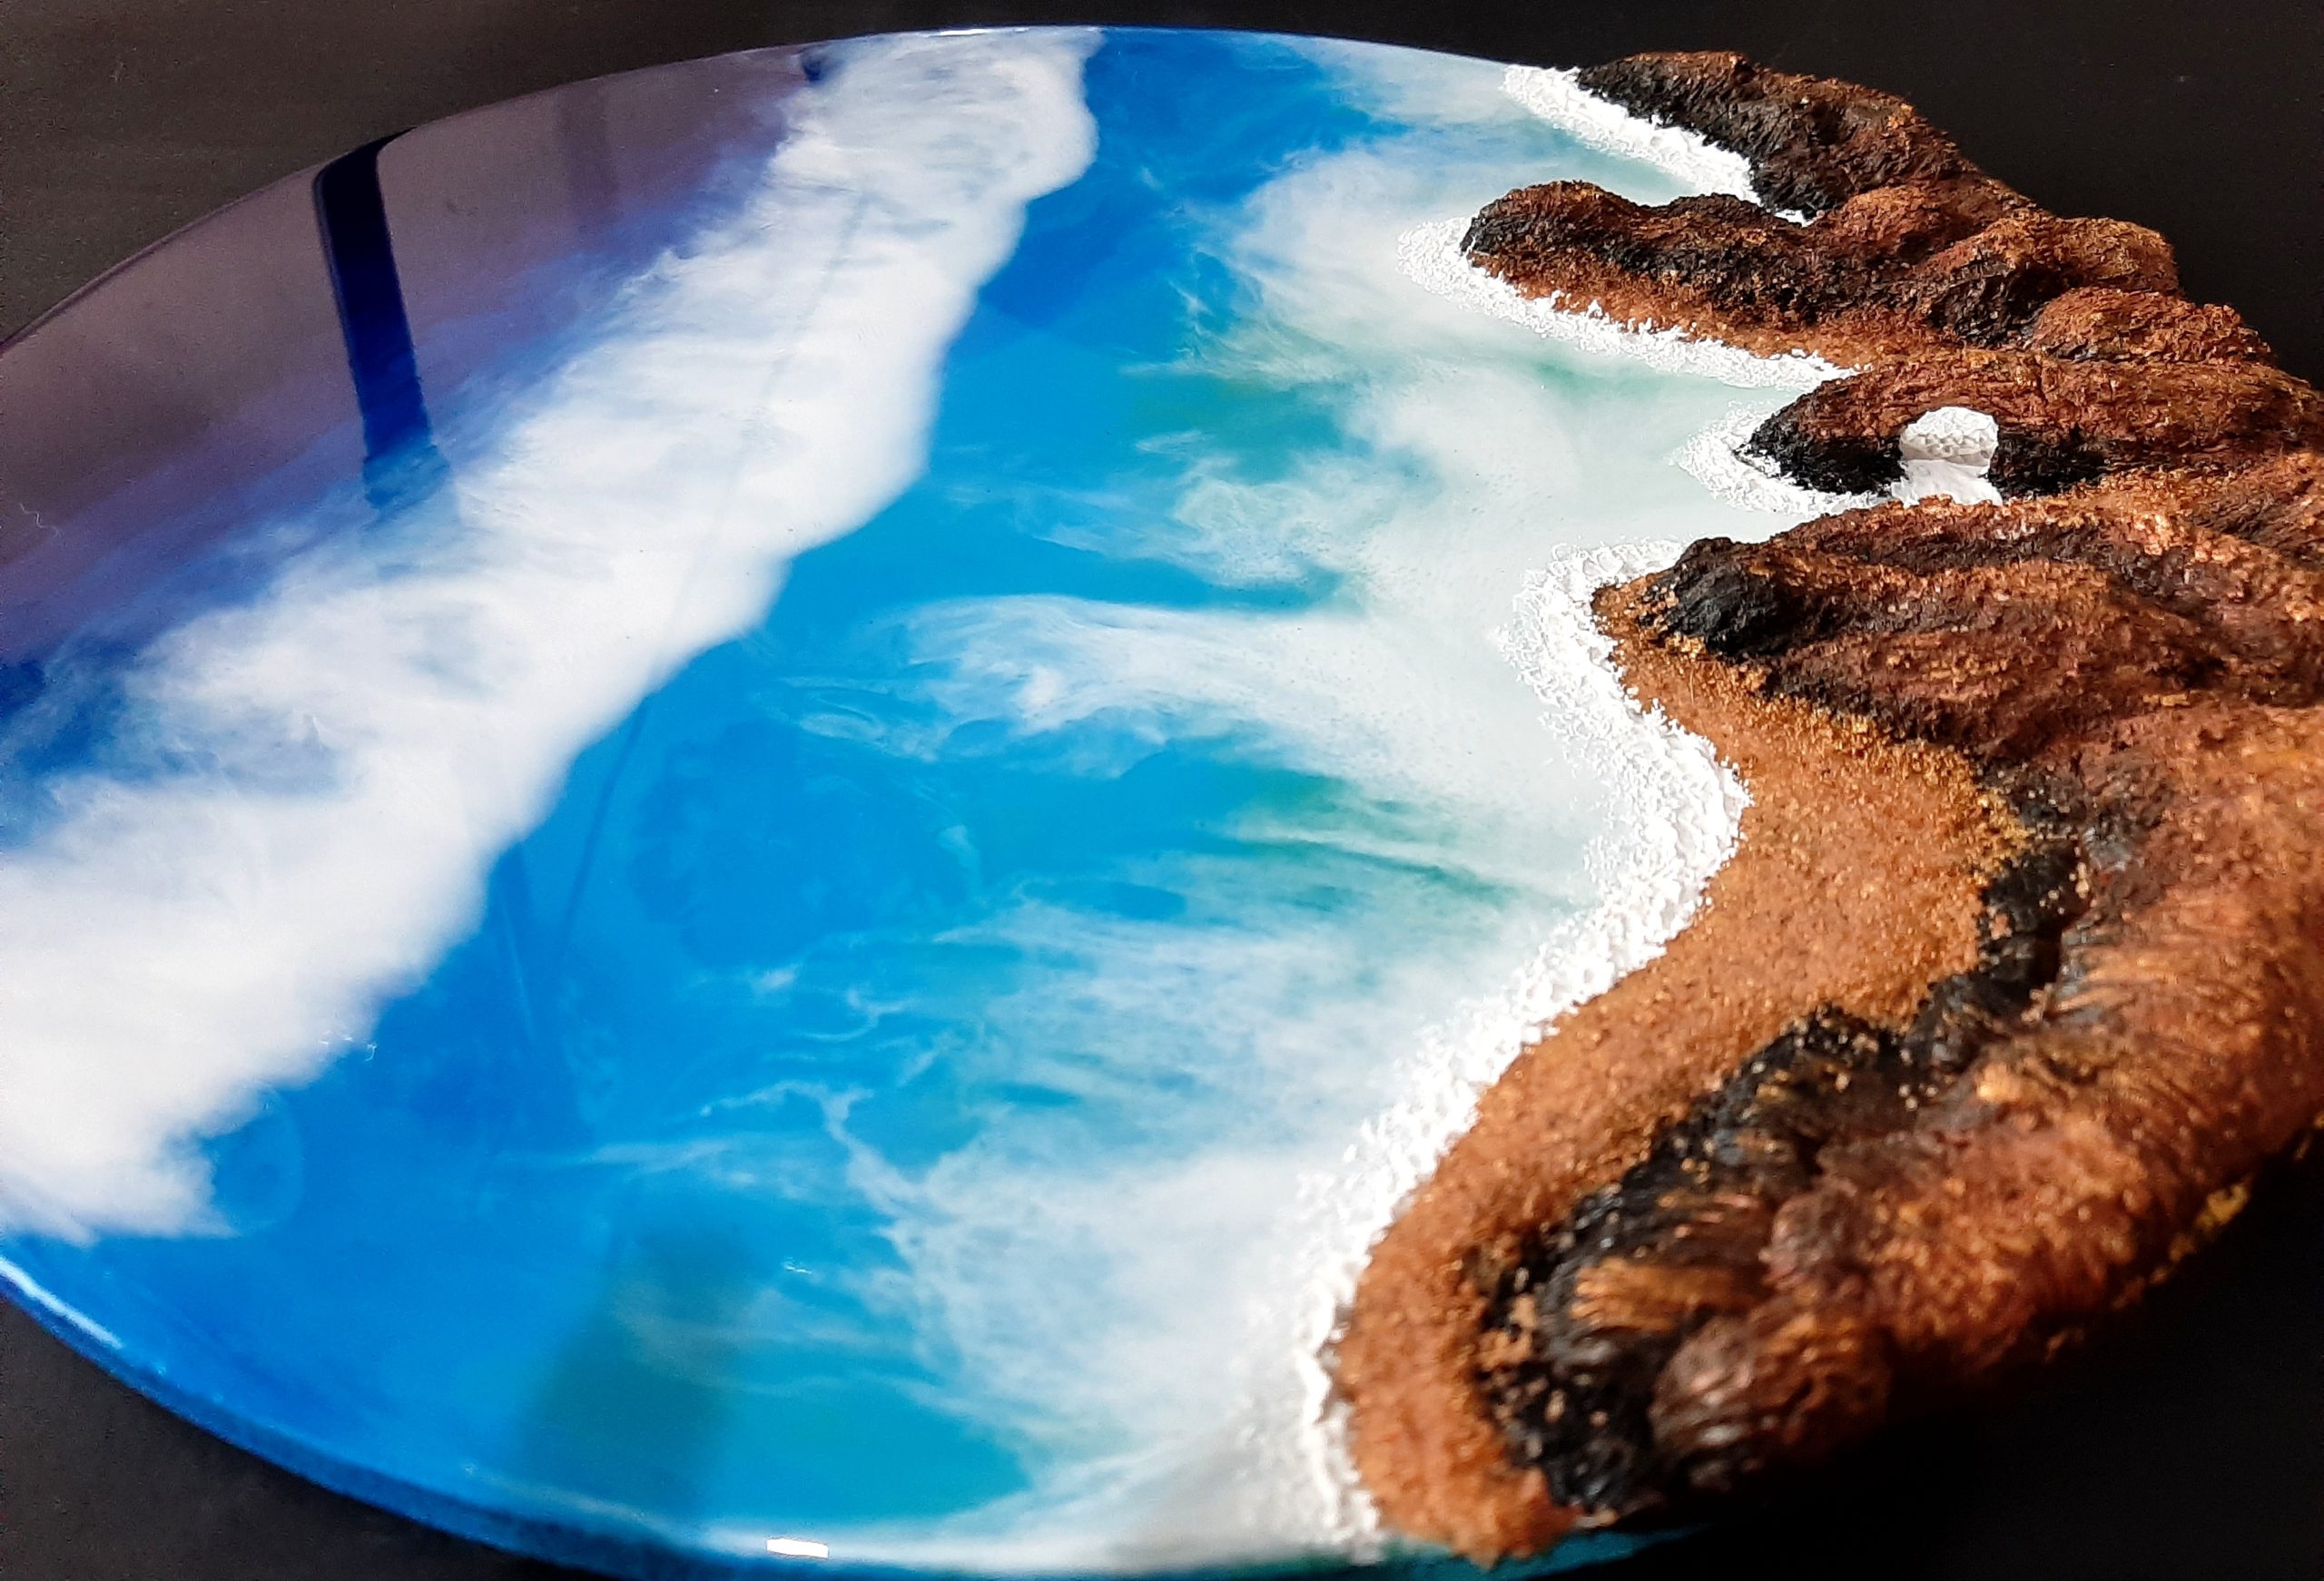 3D OCEAN RESIN ART CREATIVE ART